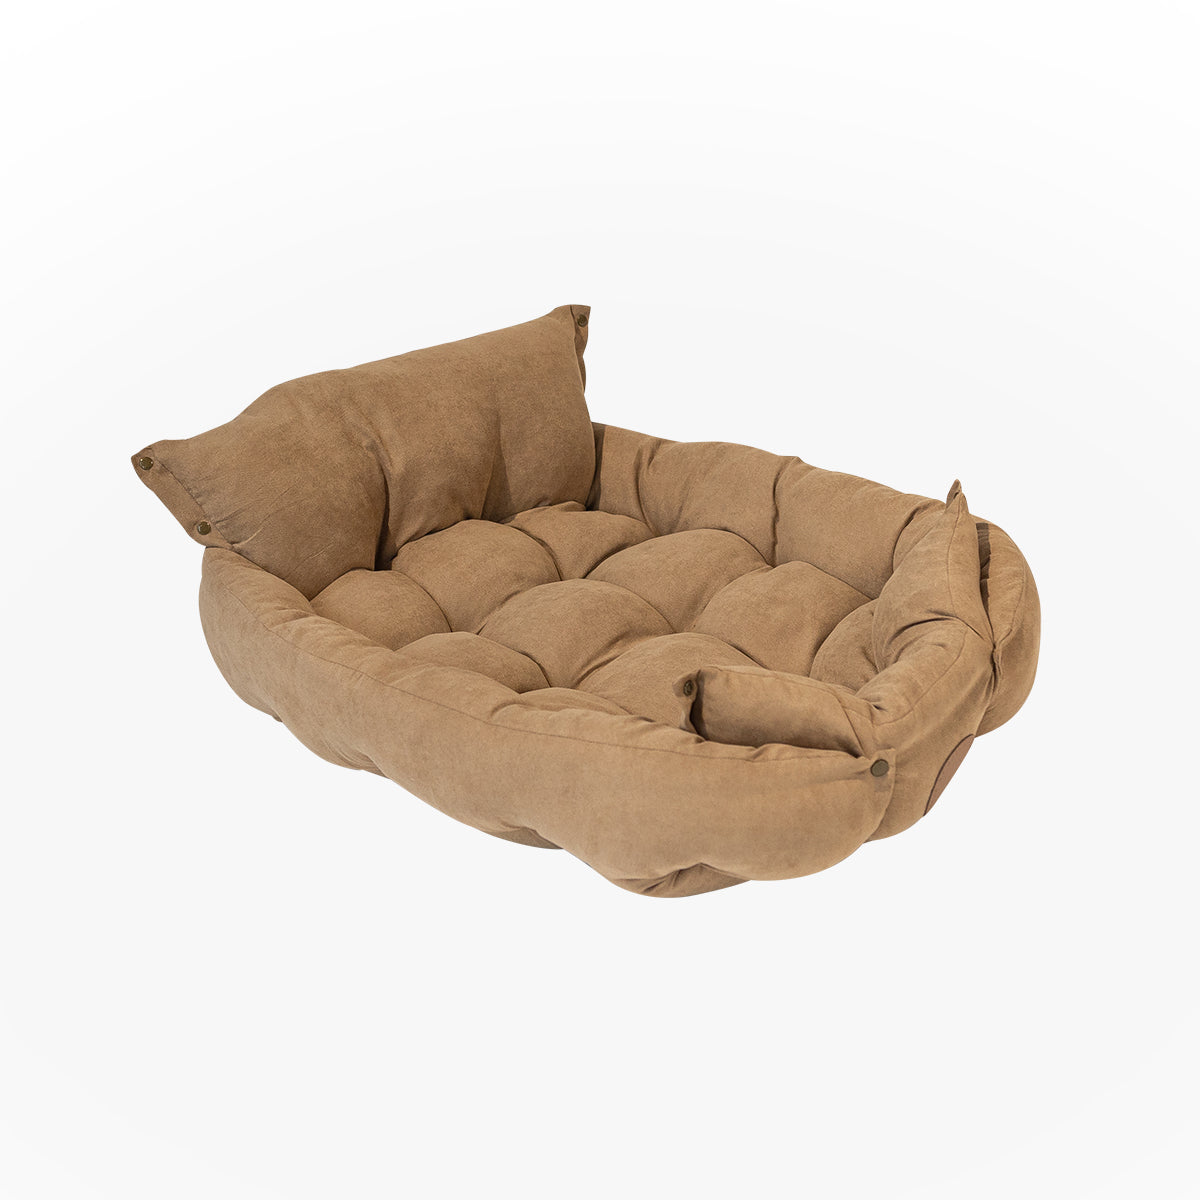 image - Brown Dog Bed Large